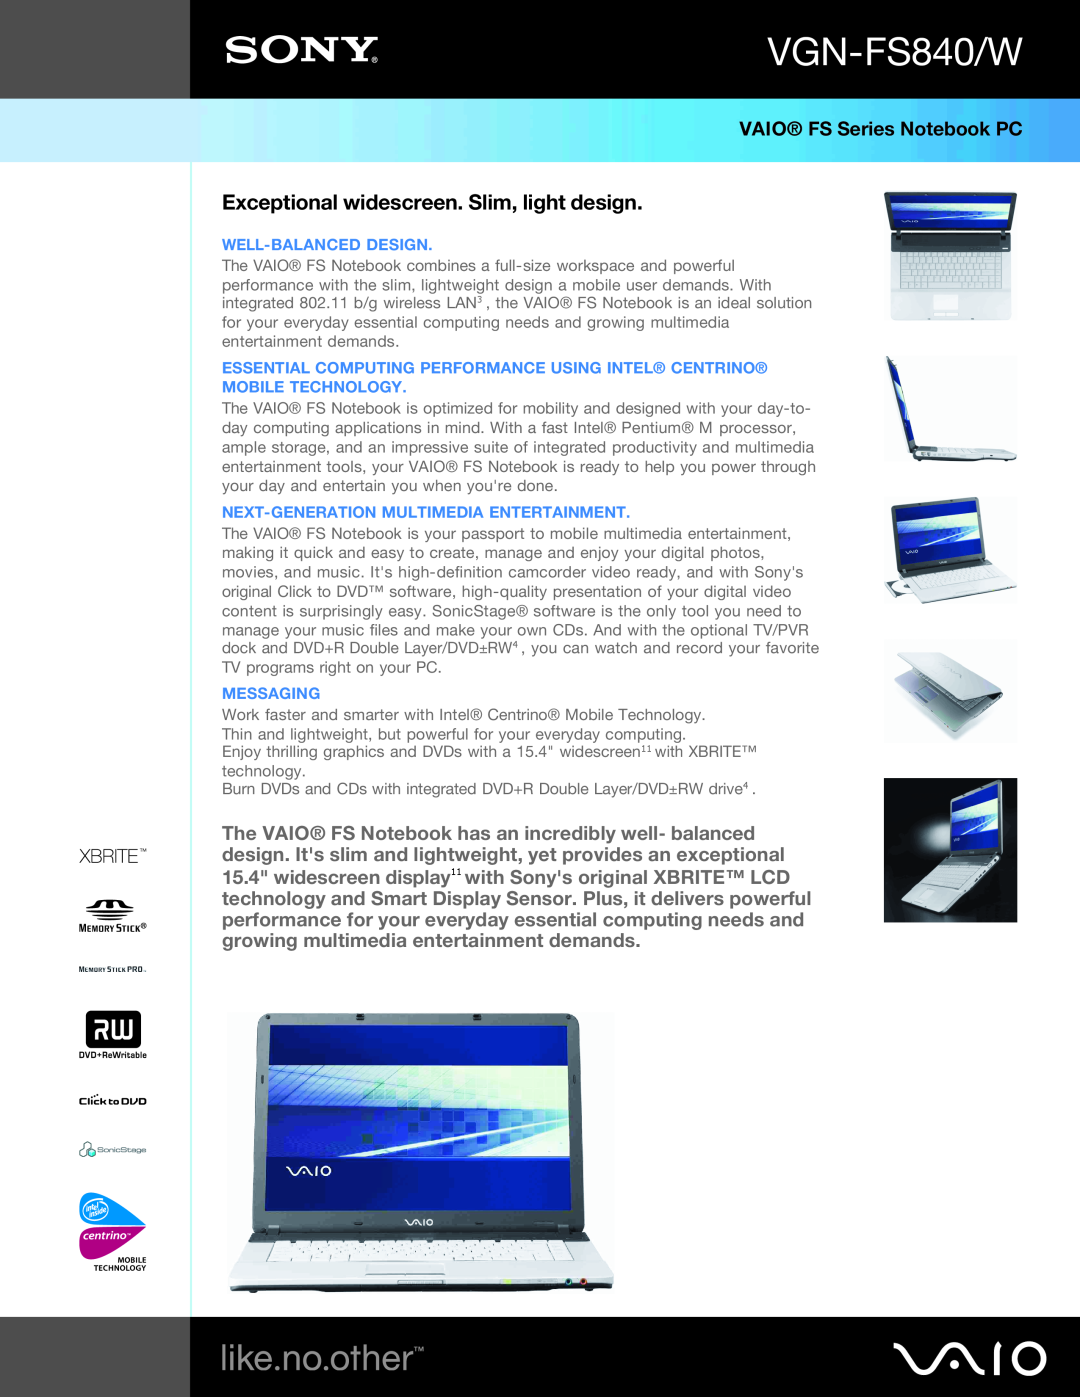 Sony VGN-FS840/W manual VAIO FS Series Notebook PC, Exceptional widescreen. Slim, light design, Well-Balanced Design 